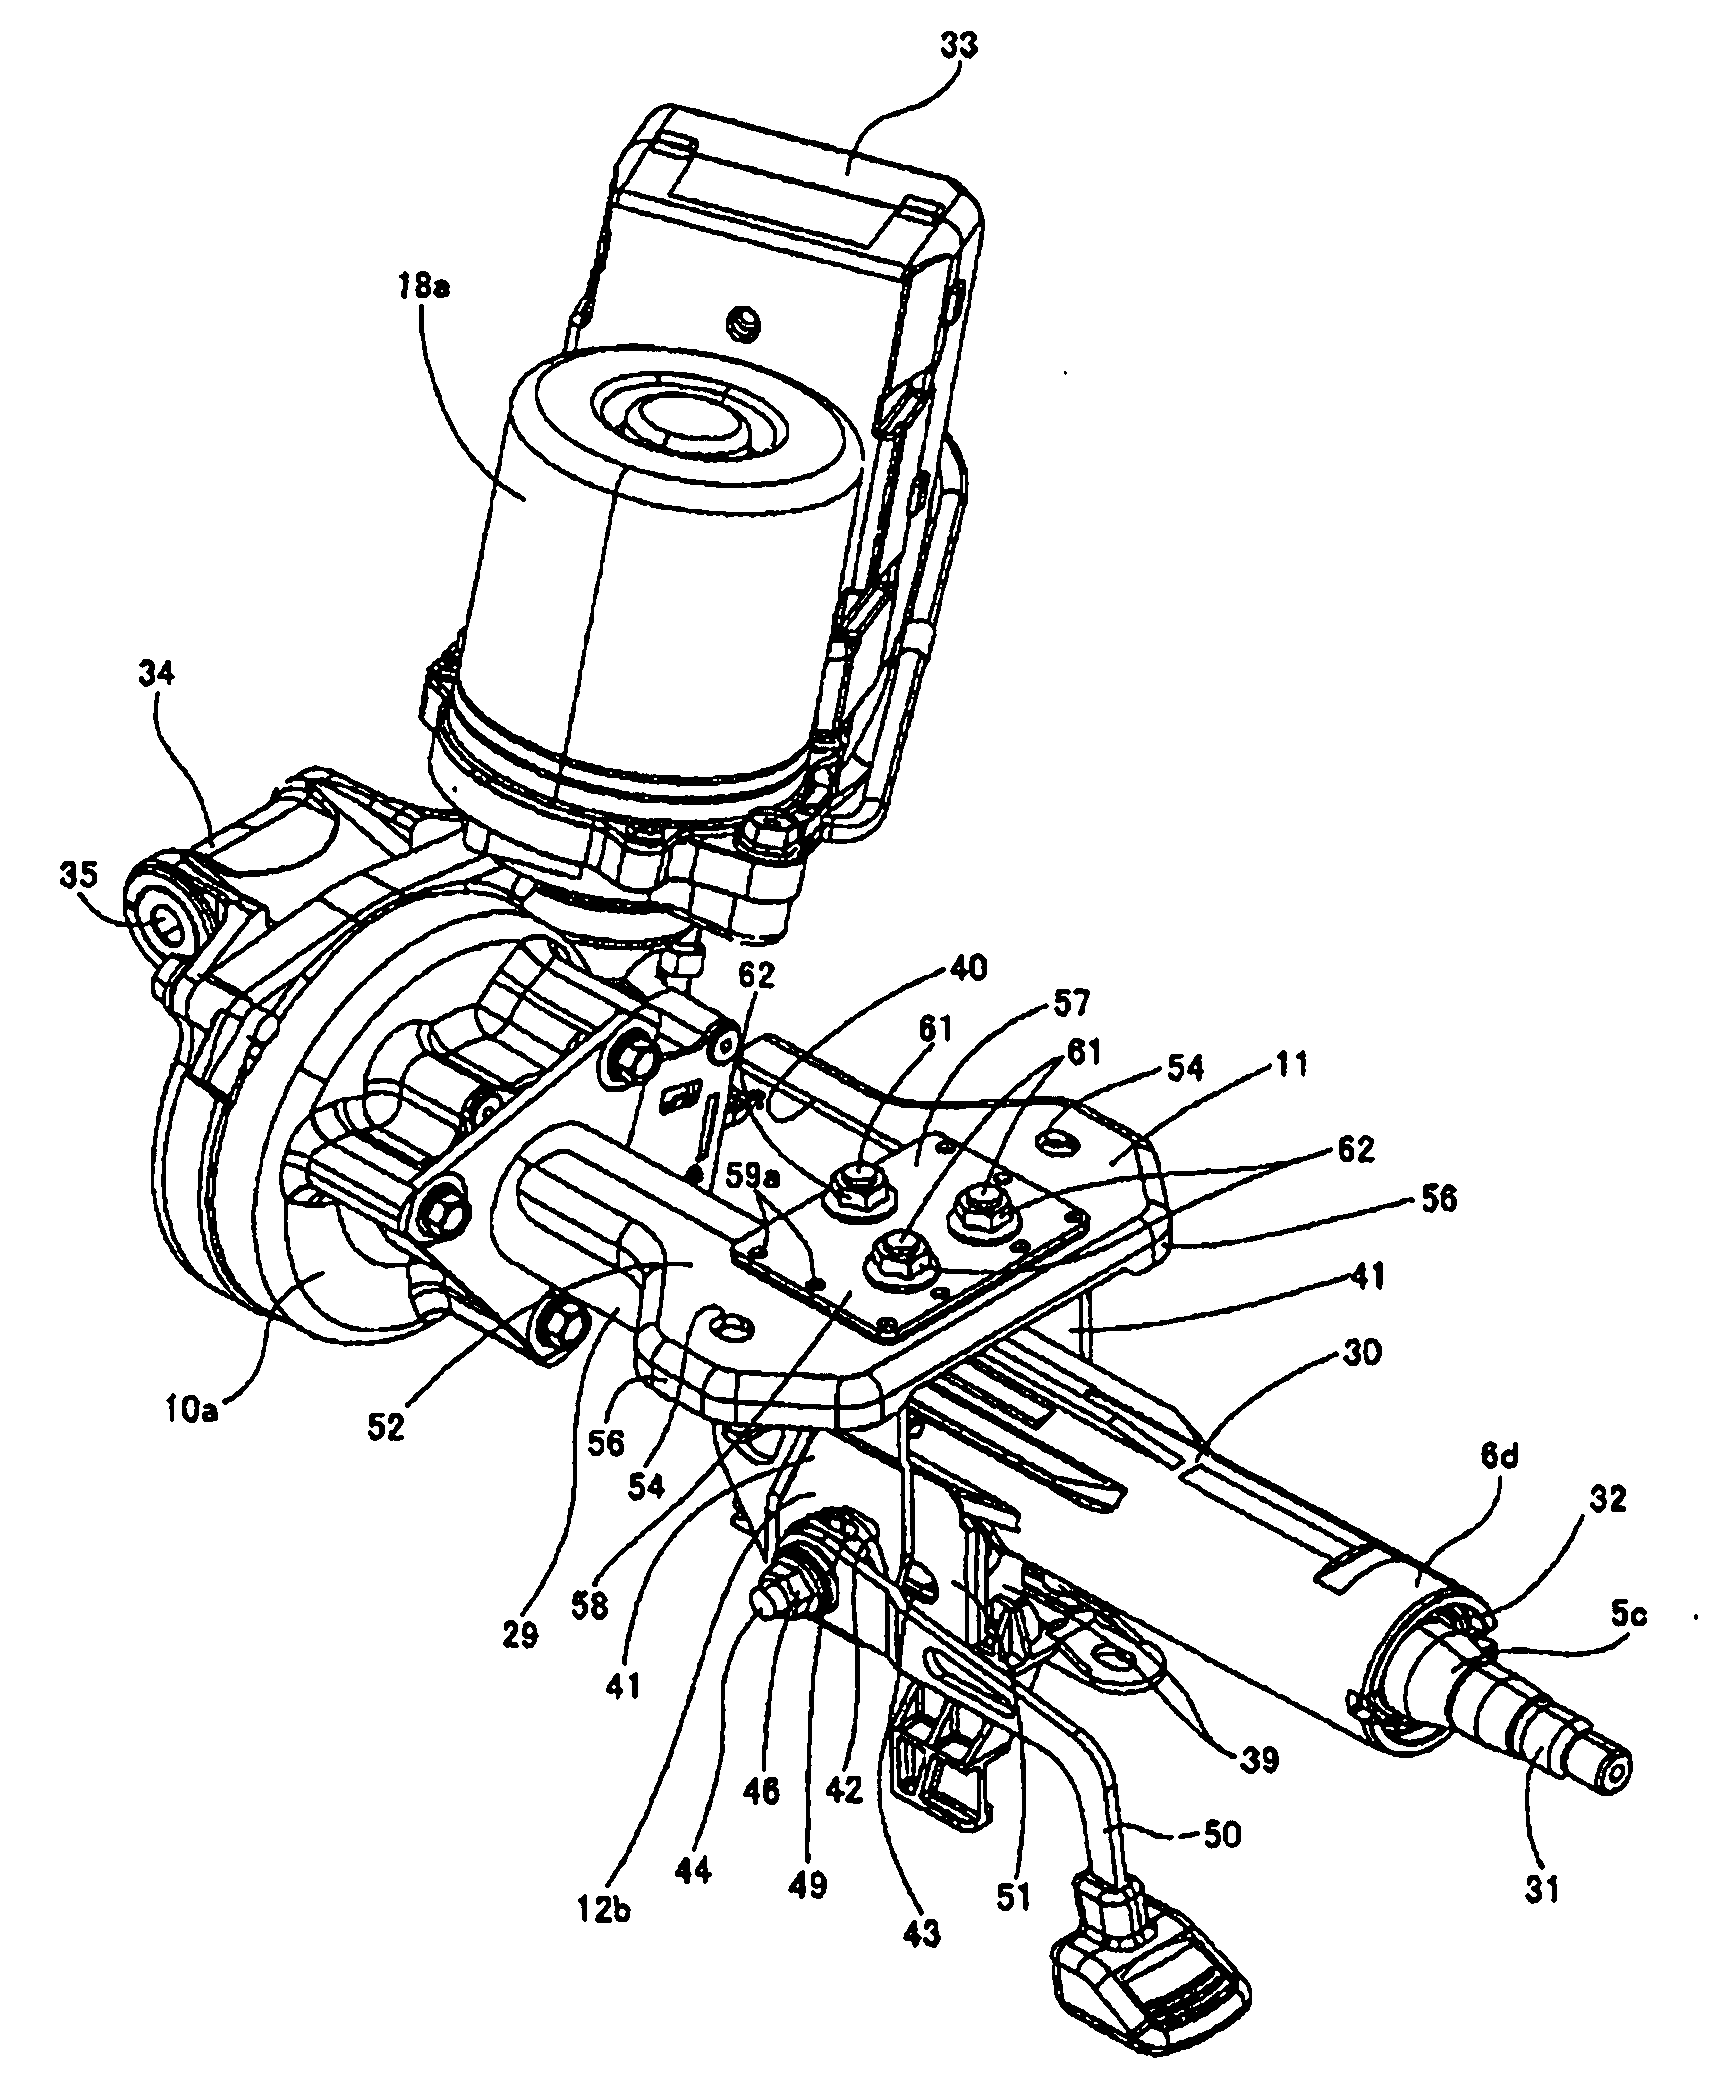 Automobile steering device